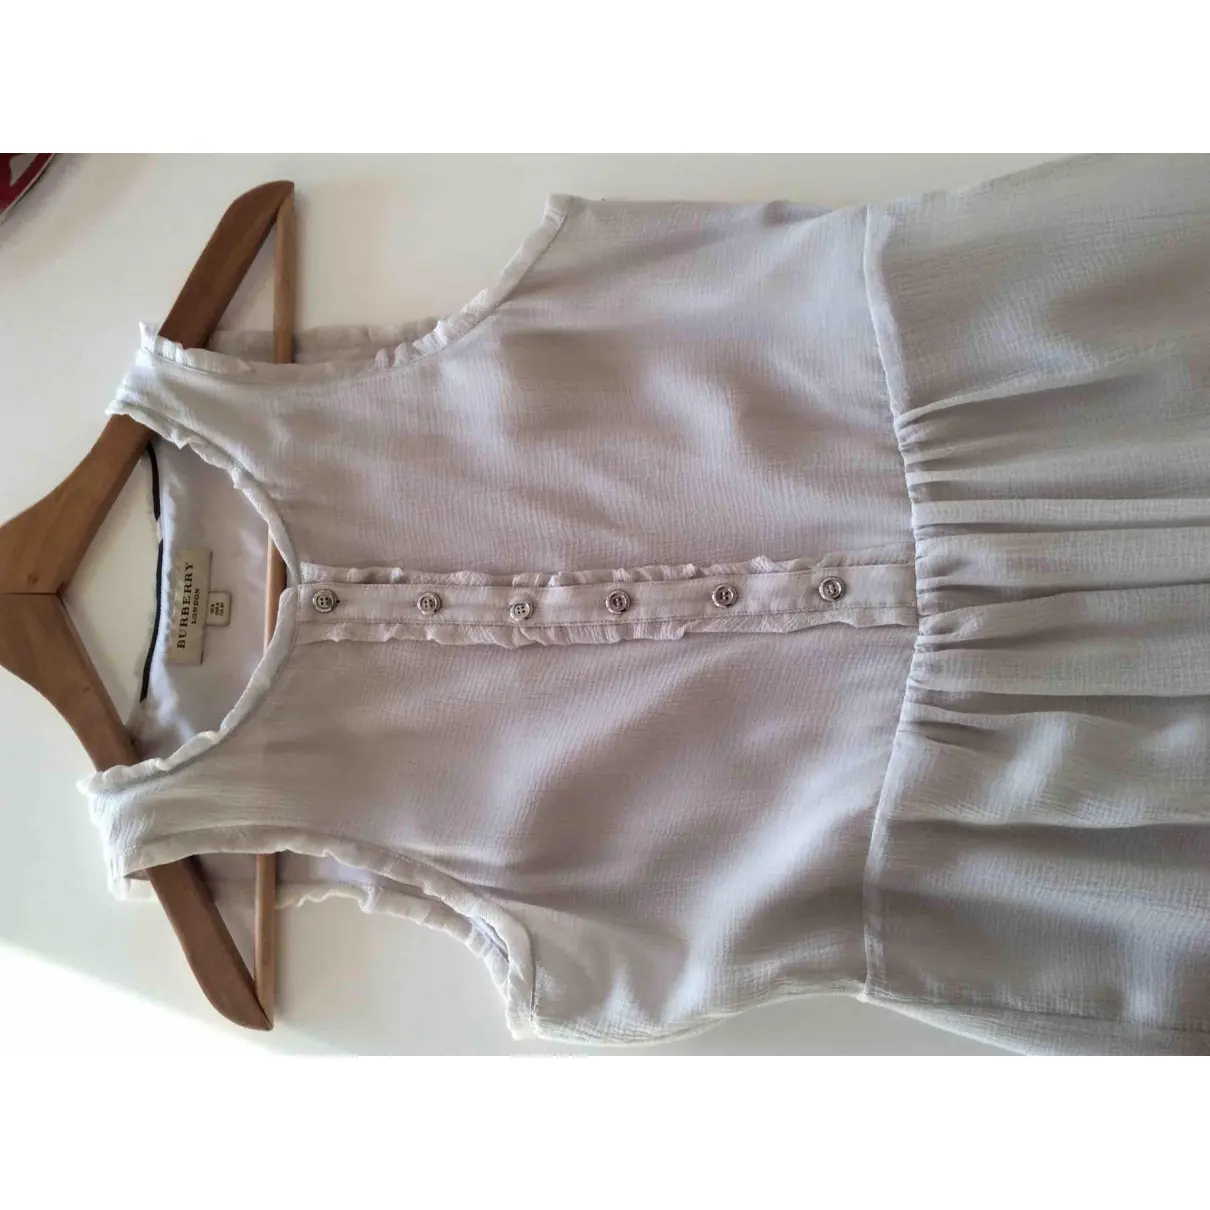 Burberry Silk mid-length dress for sale